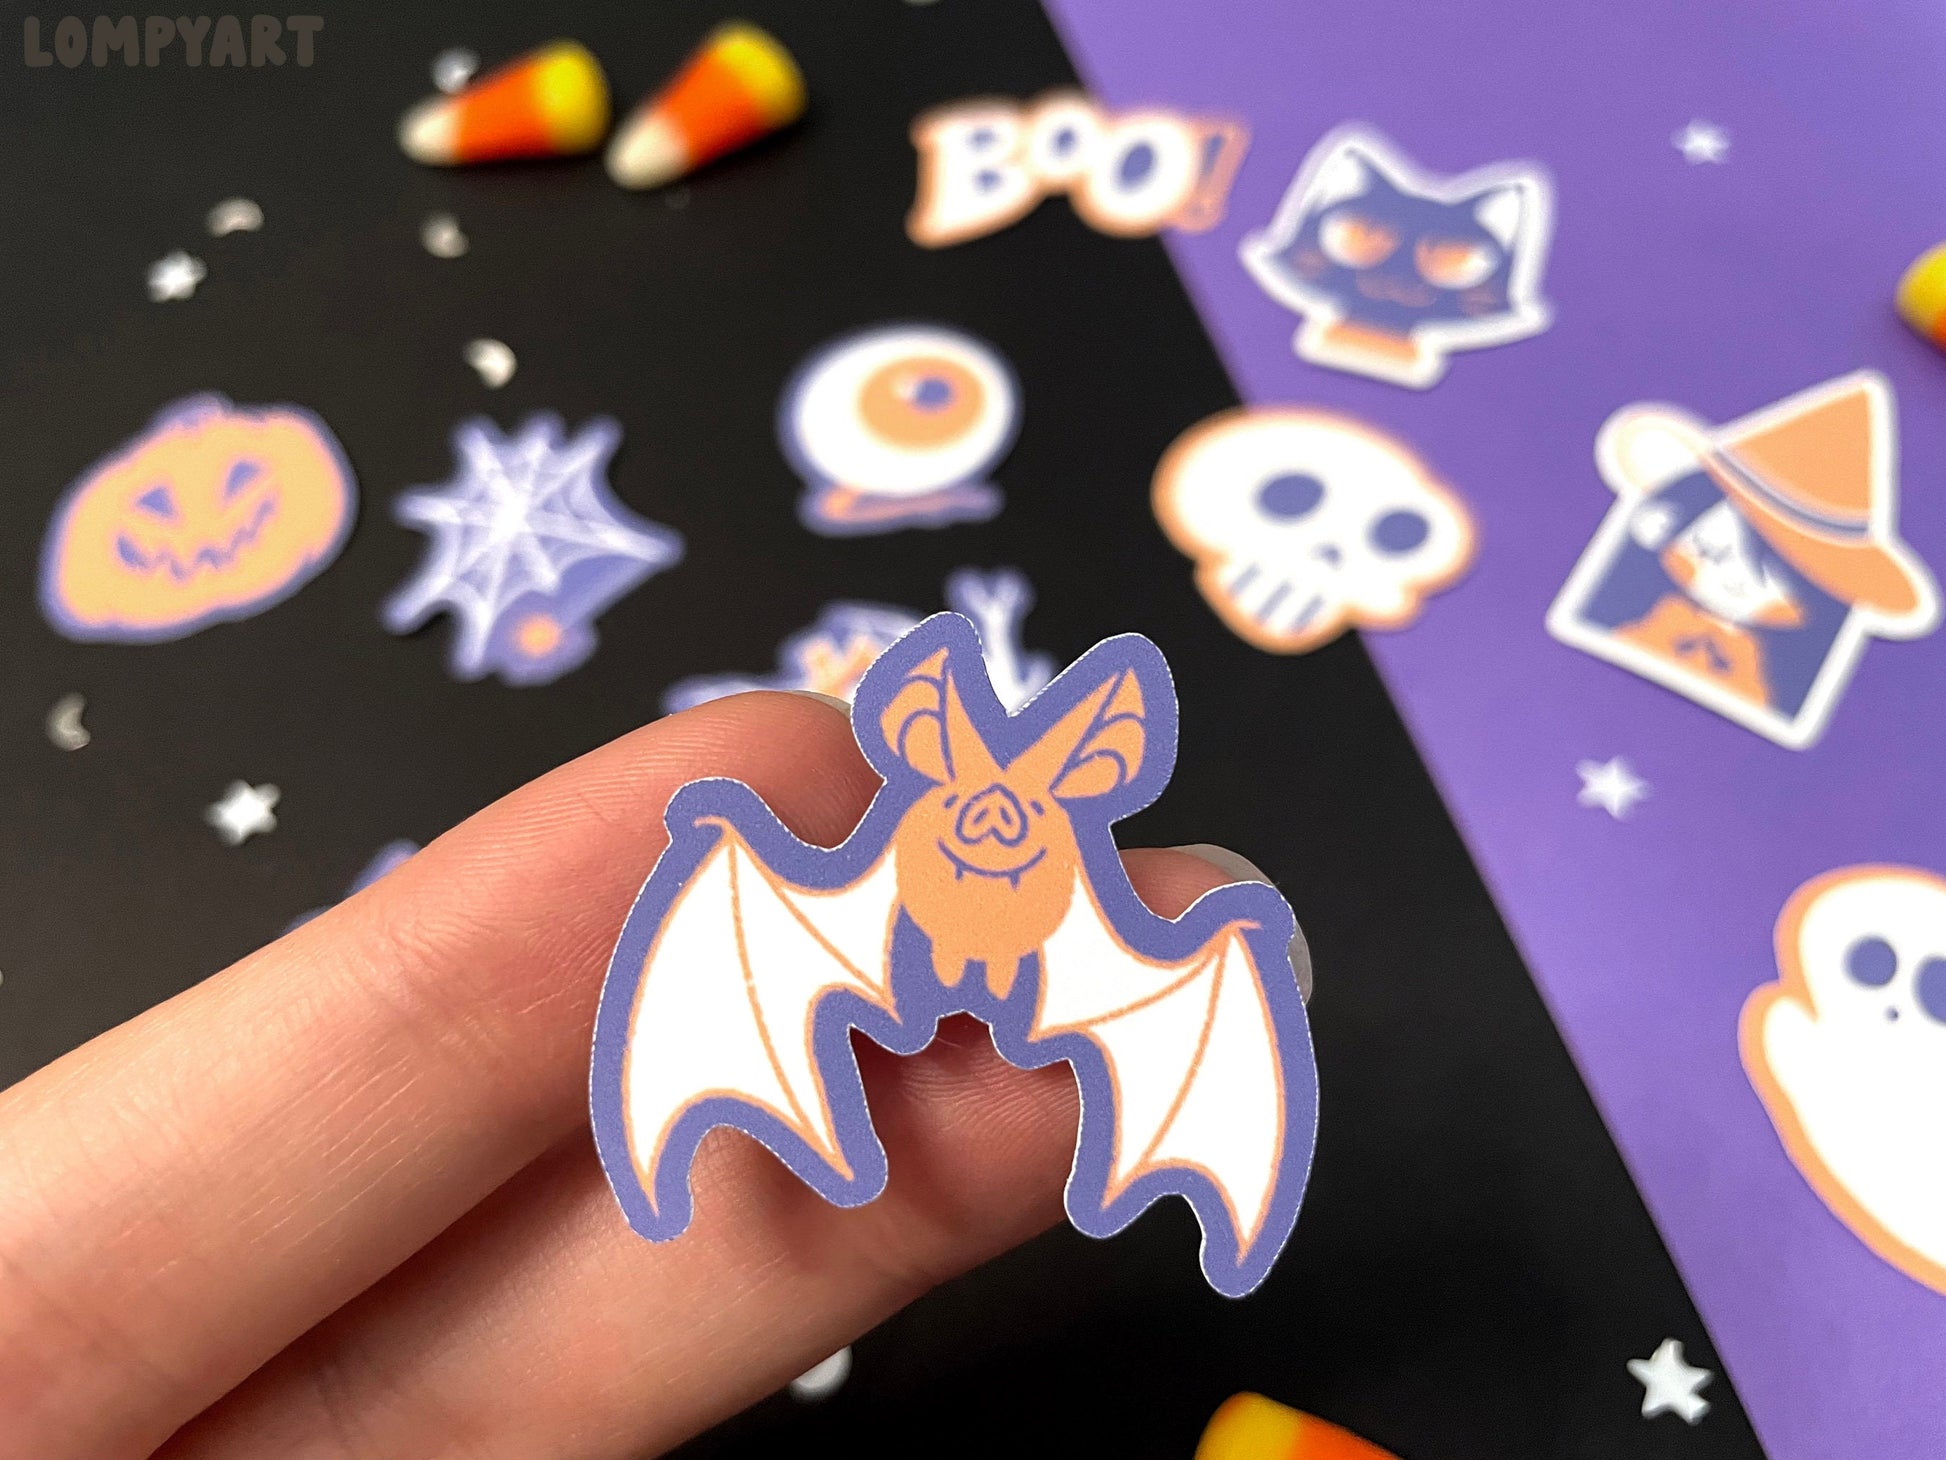 Halloween Sticker Set / Cute spooky character illustration hand drawn art purple orange cat bat witch haunted house pumpkin ghost spider